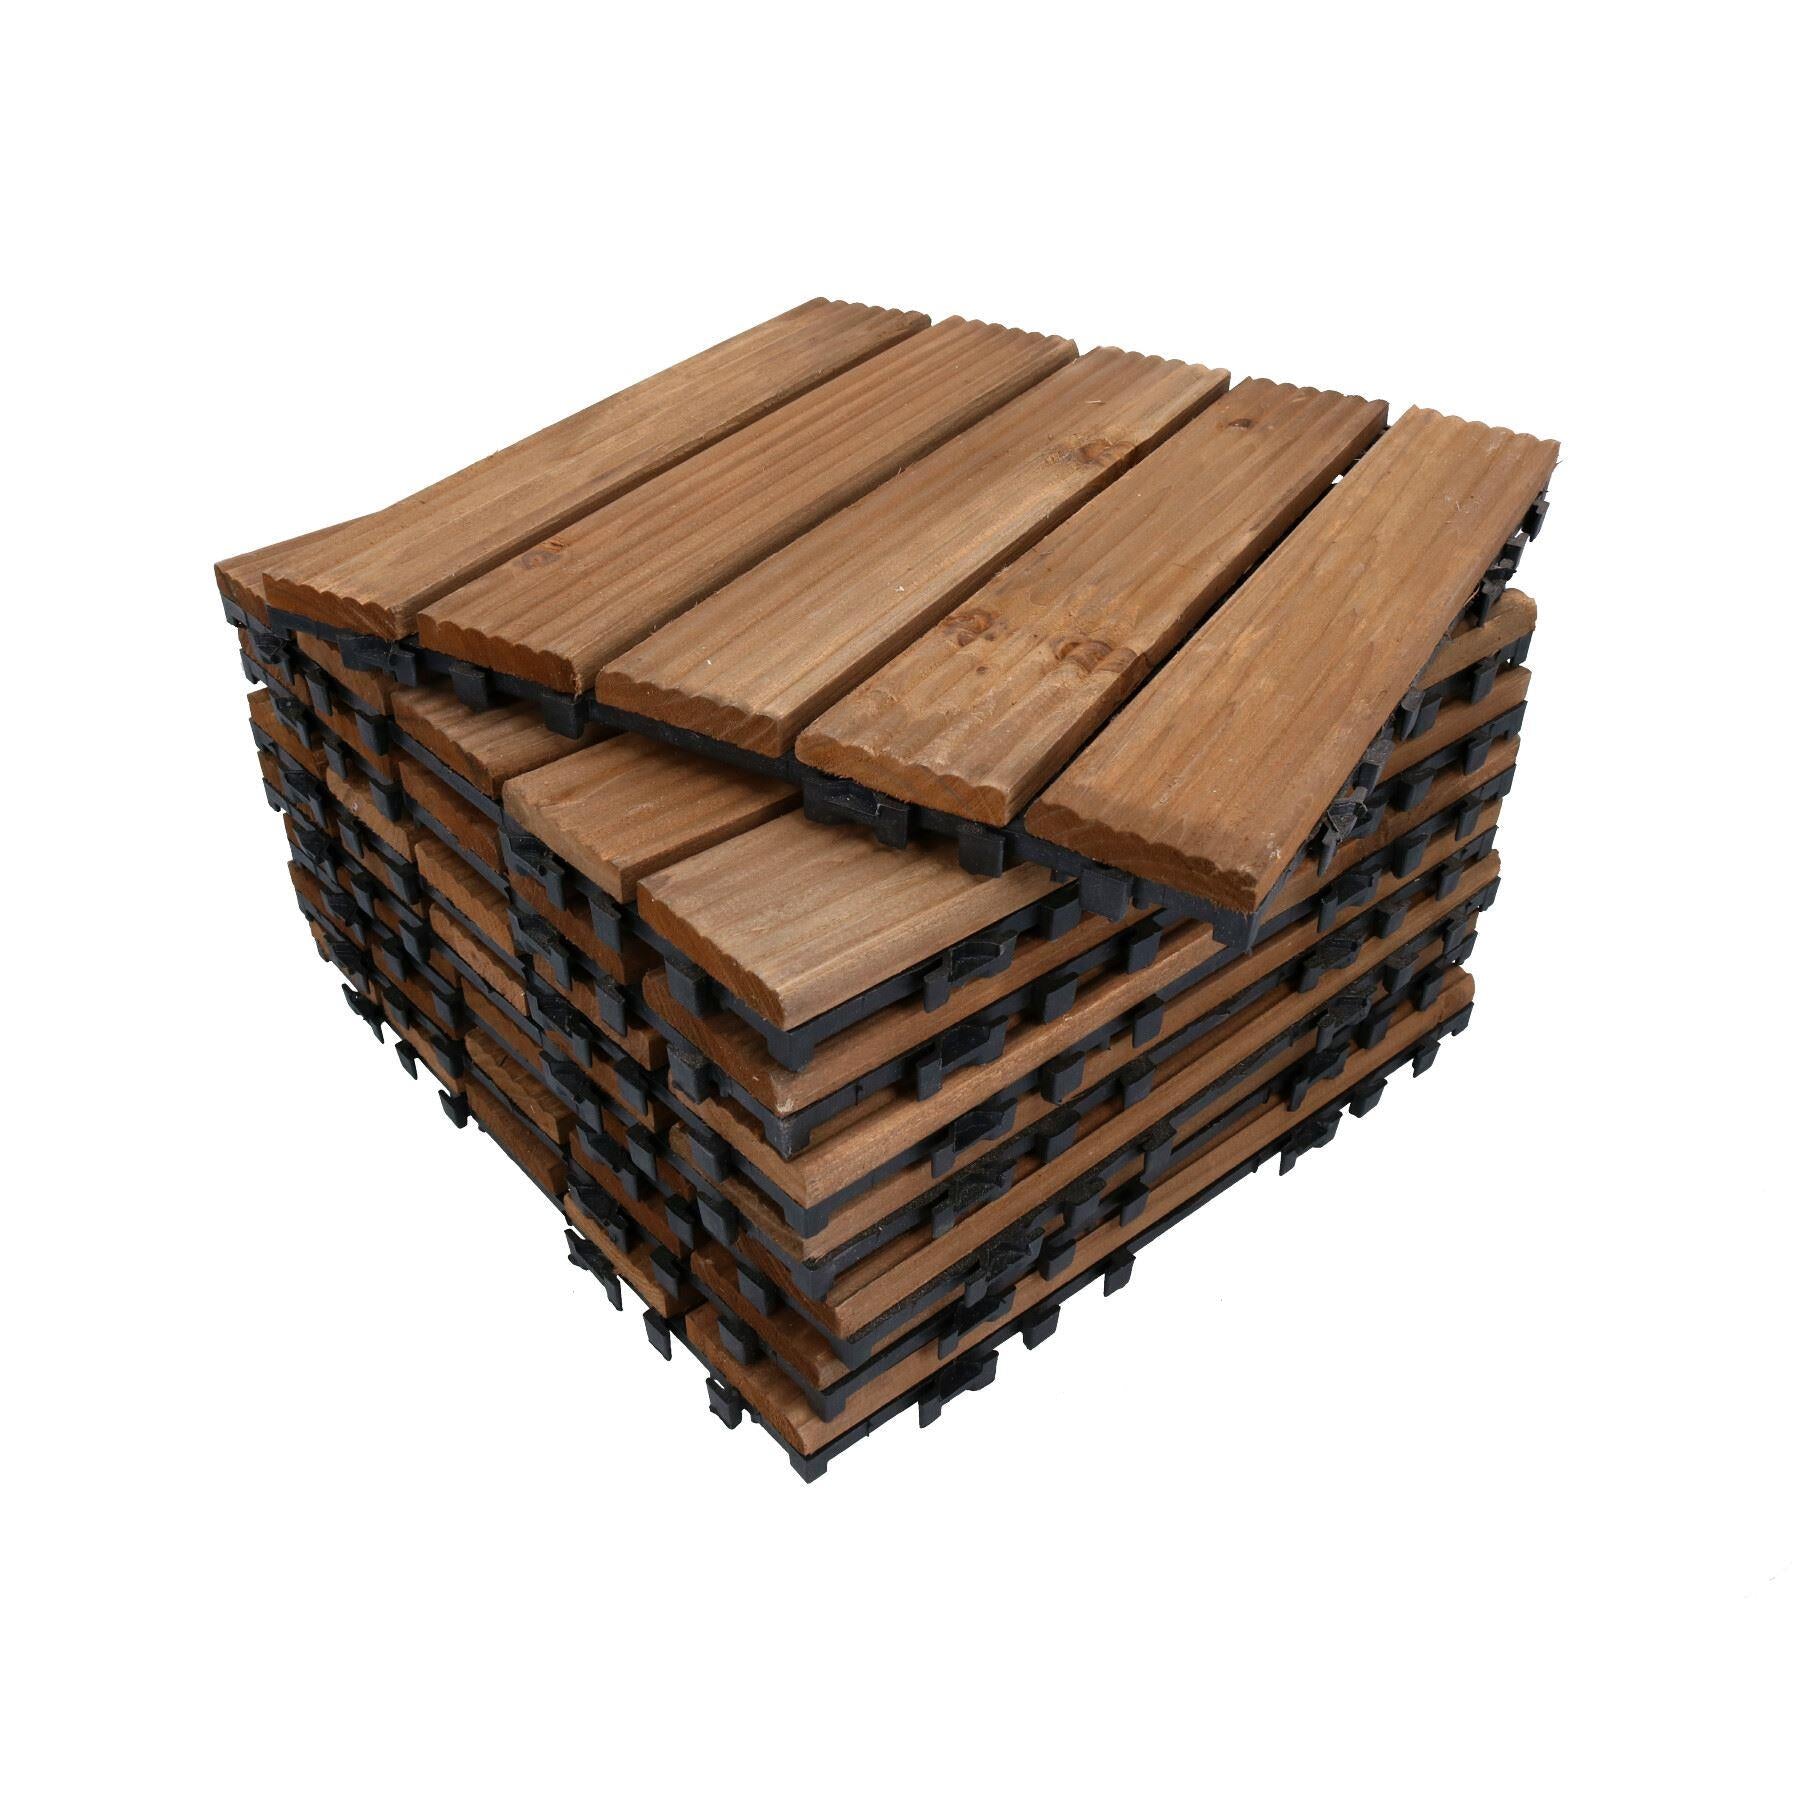 Hardwood Decking Non Slip Tiles Wooden Garden Flooring Quick Click Fitment